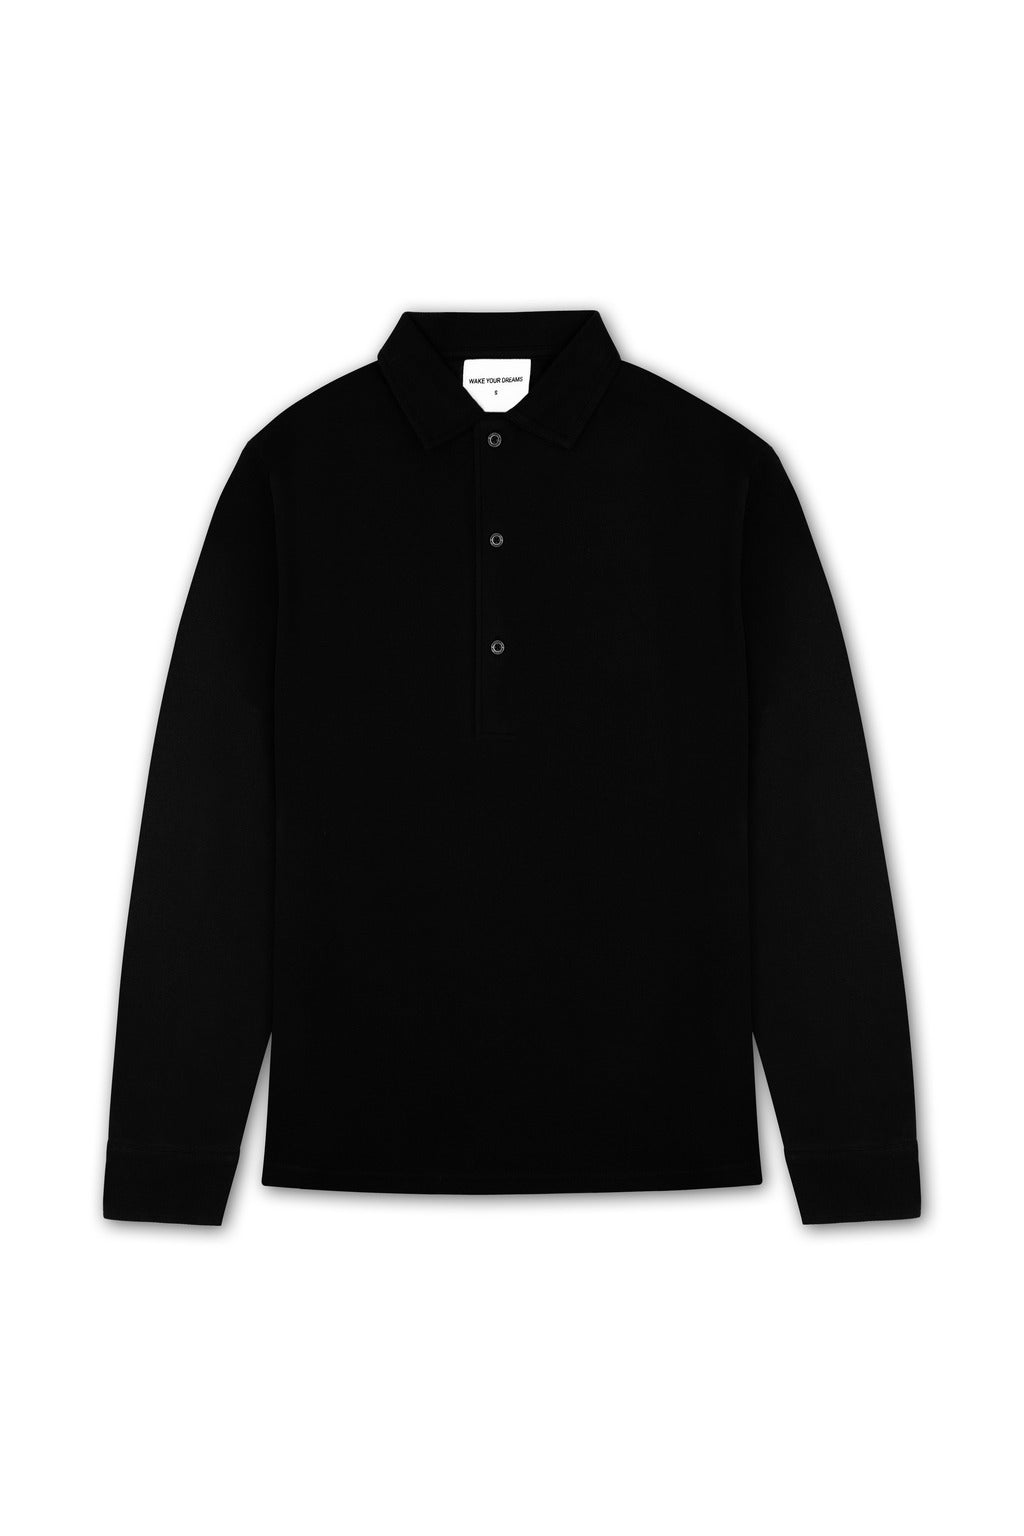 Coal-Black-Designer-Luxury-Polo-Shirt-4